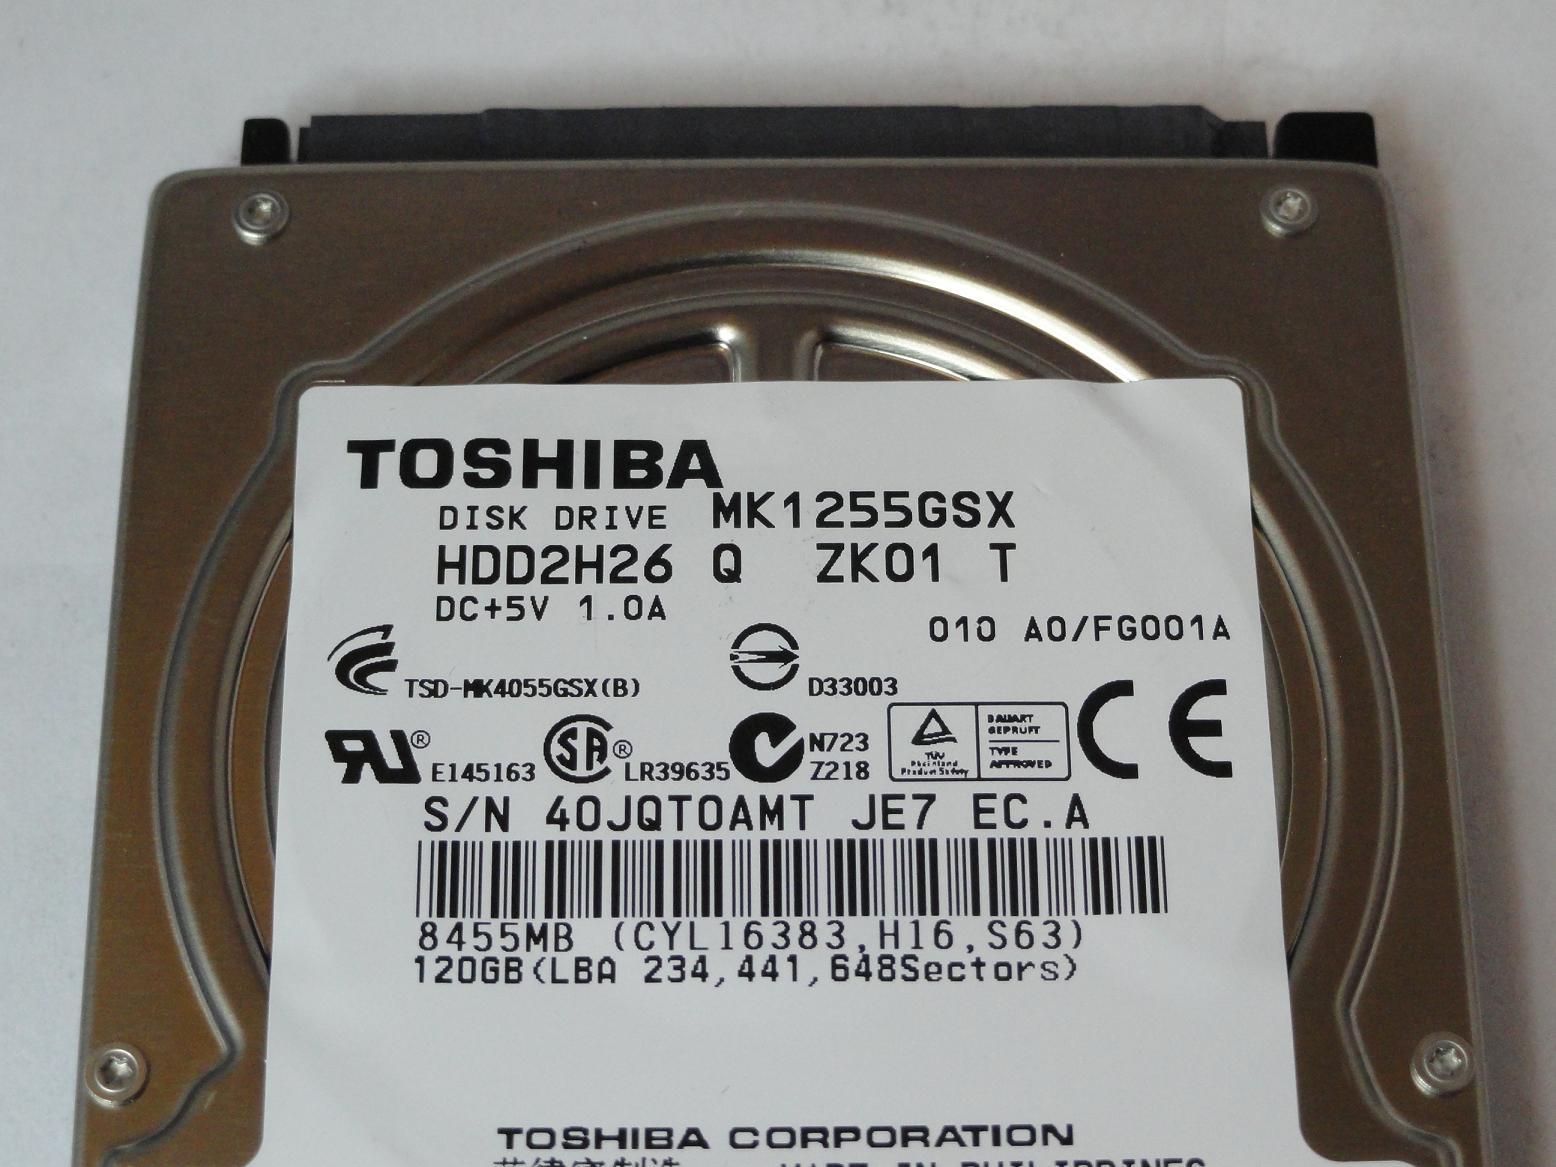 PR23610_HDD2H26_Toshiba 120GB SATA 5400rpm 2.5in Laptop HDD - Image3